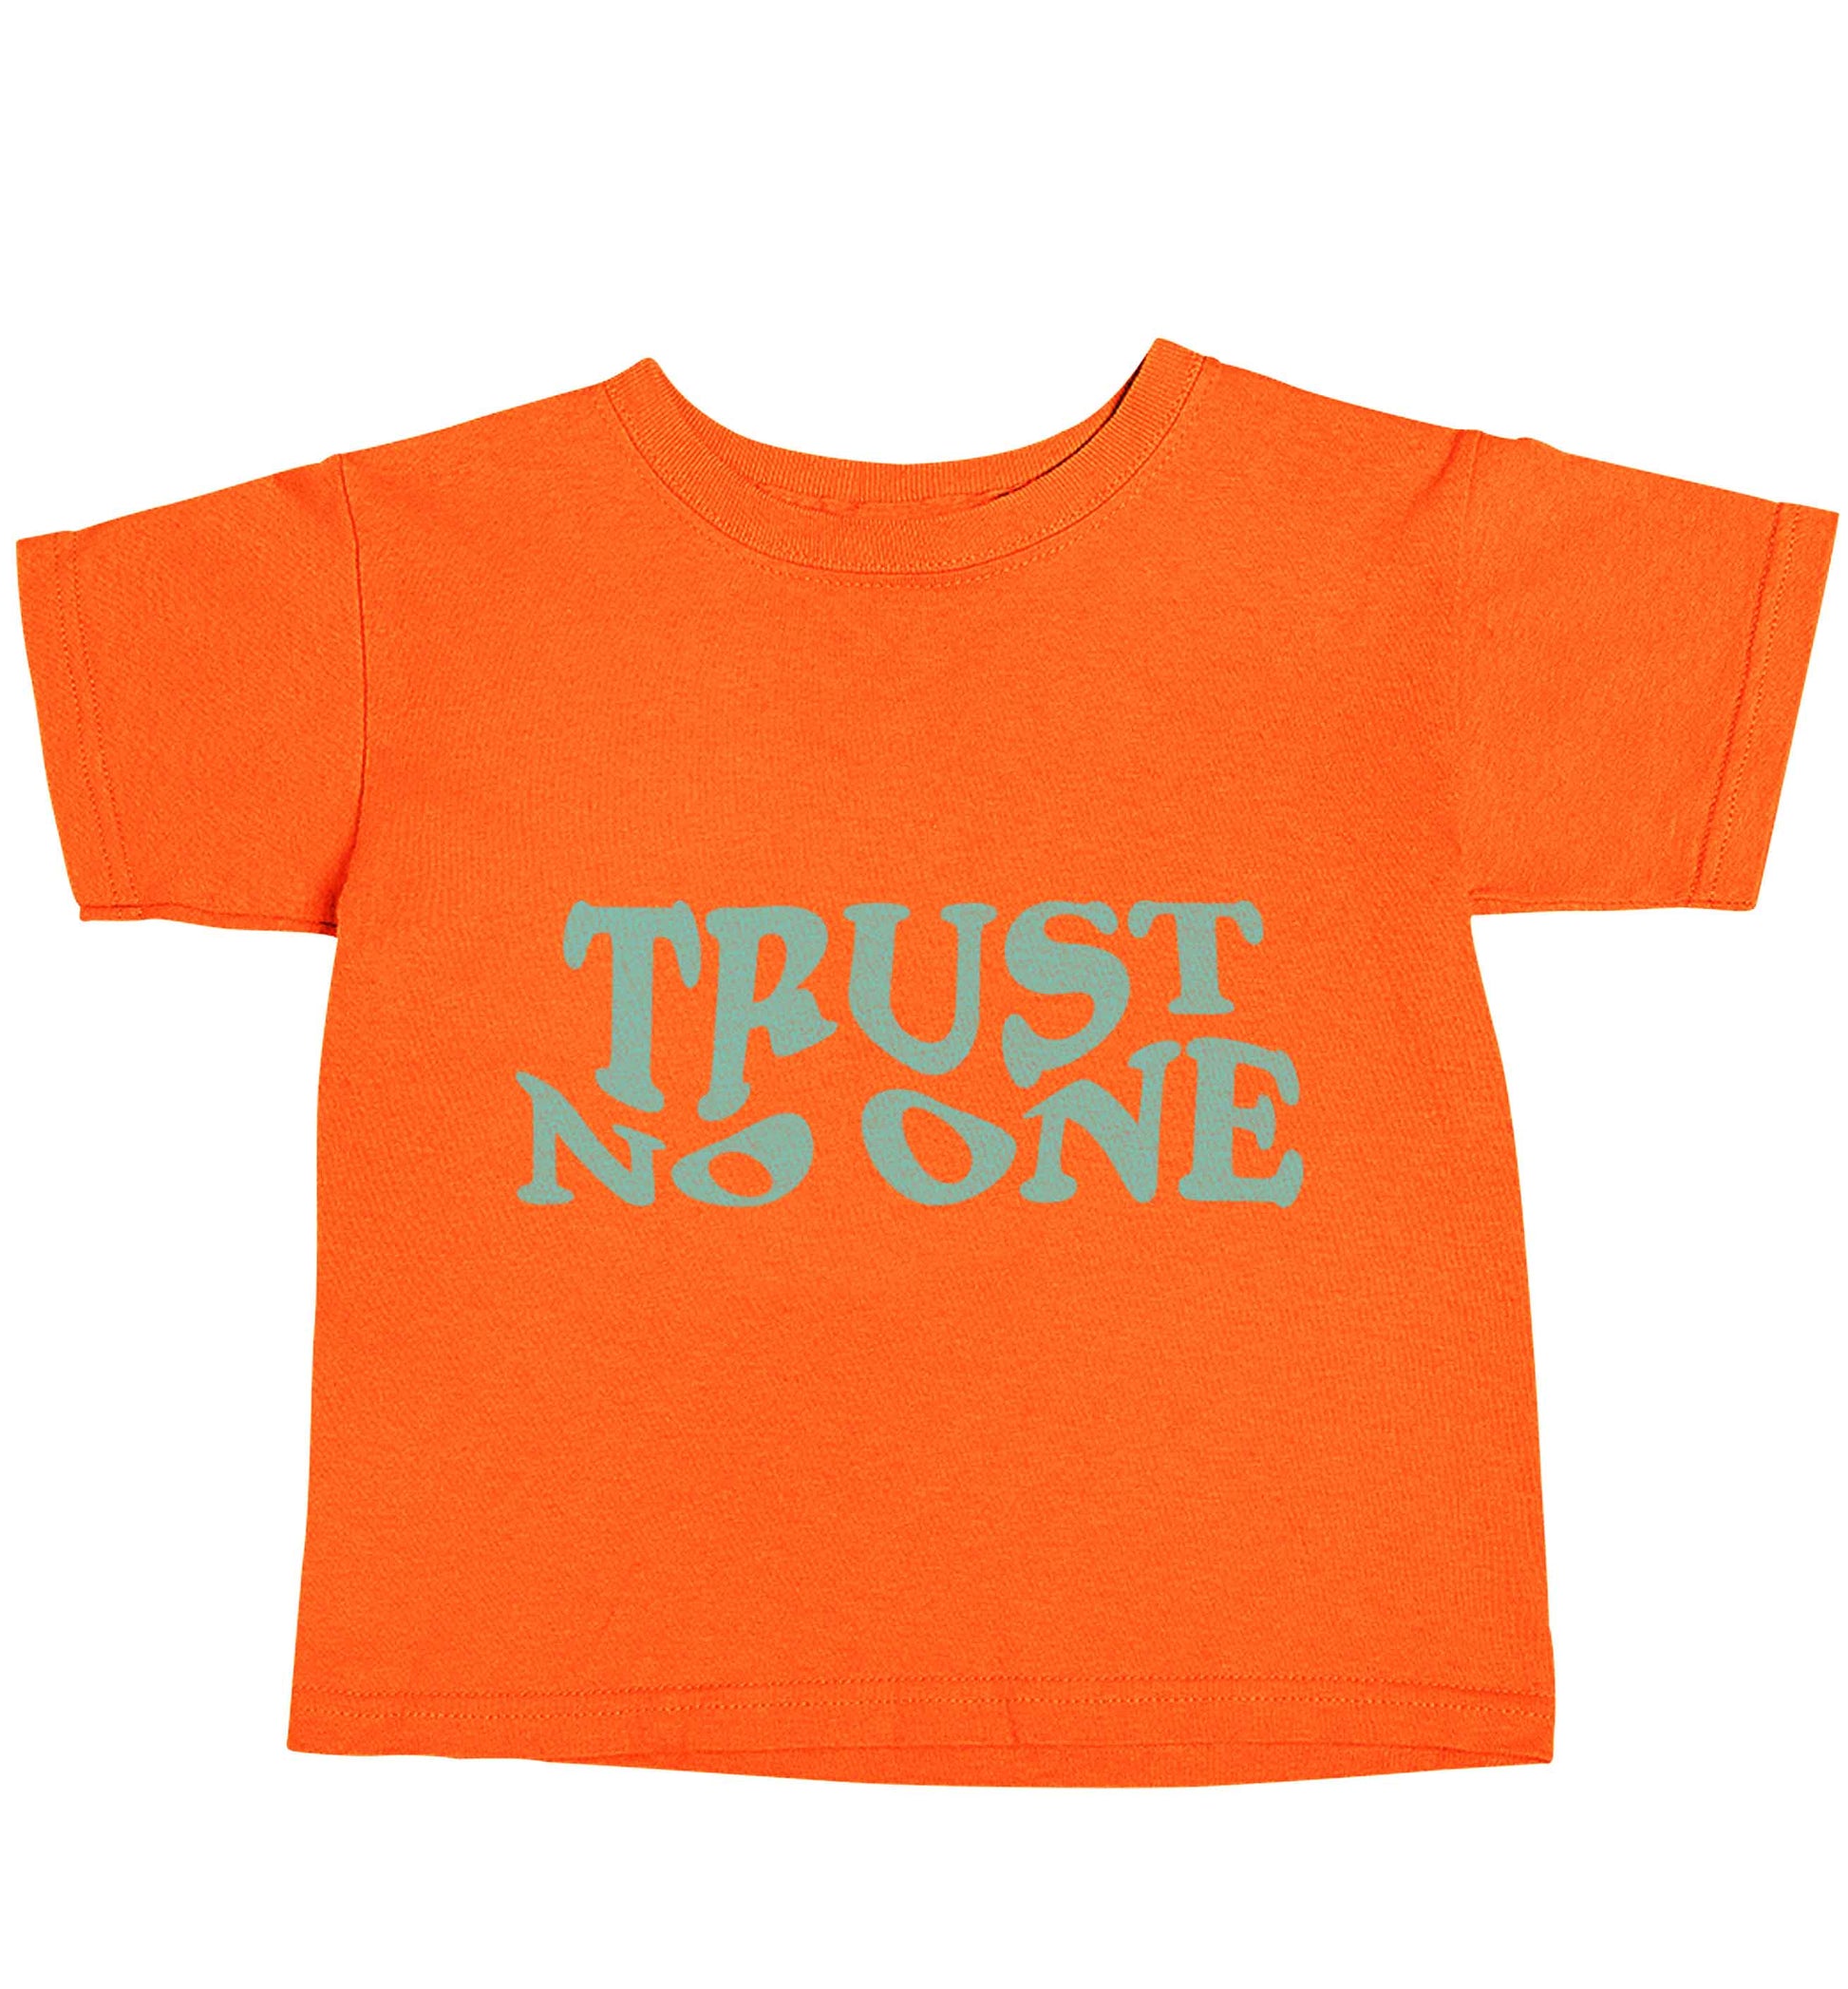 Trust no one orange baby toddler Tshirt 2 Years